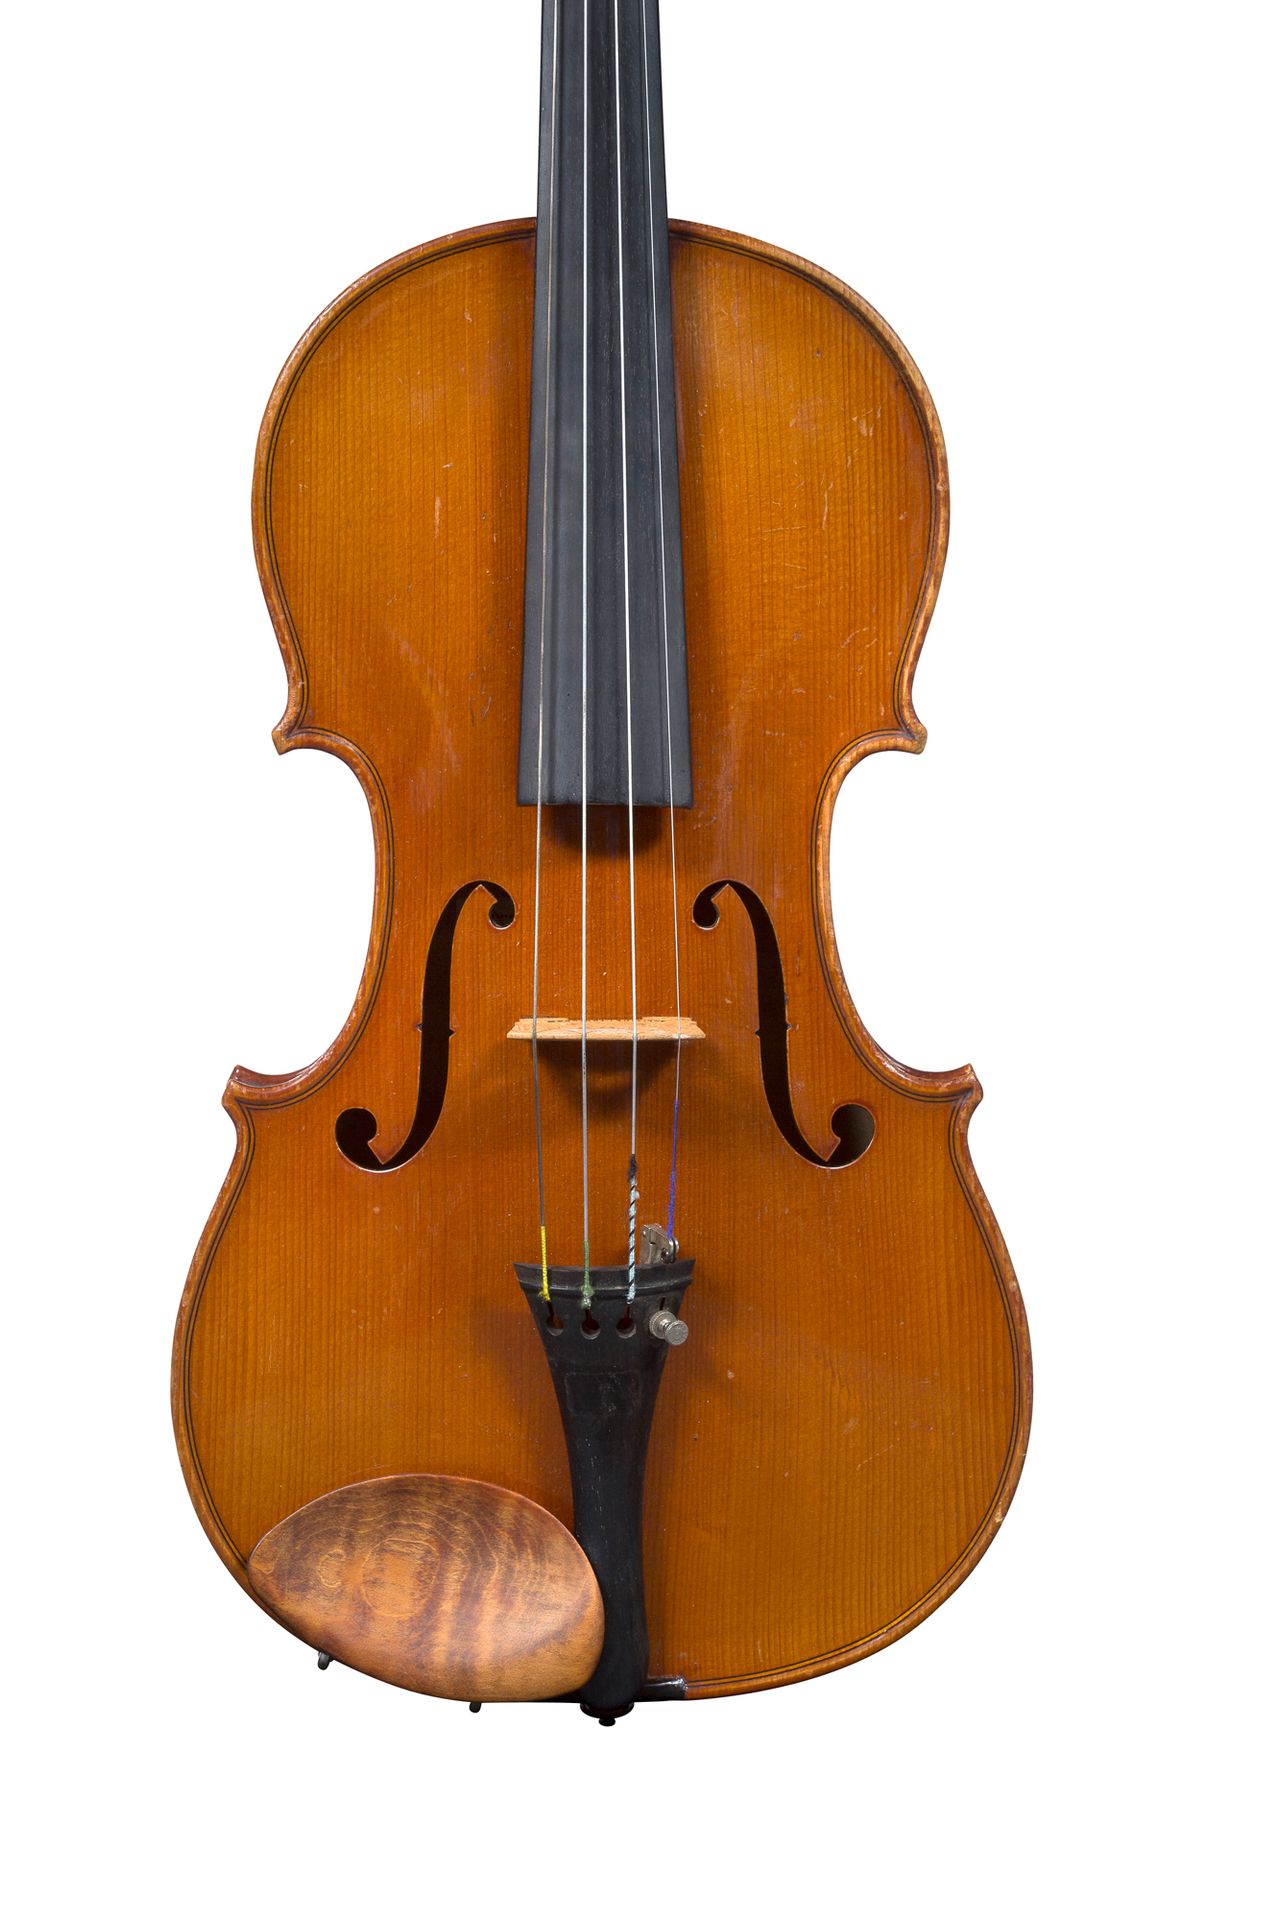 Null 古斯塔夫-维罗姆的小提琴
1929年制造
带有Gustave Villaume的标签和后跟下的铁印
艺术小提琴制作
状况良好
随时可以演奏 
背部35&hellip;